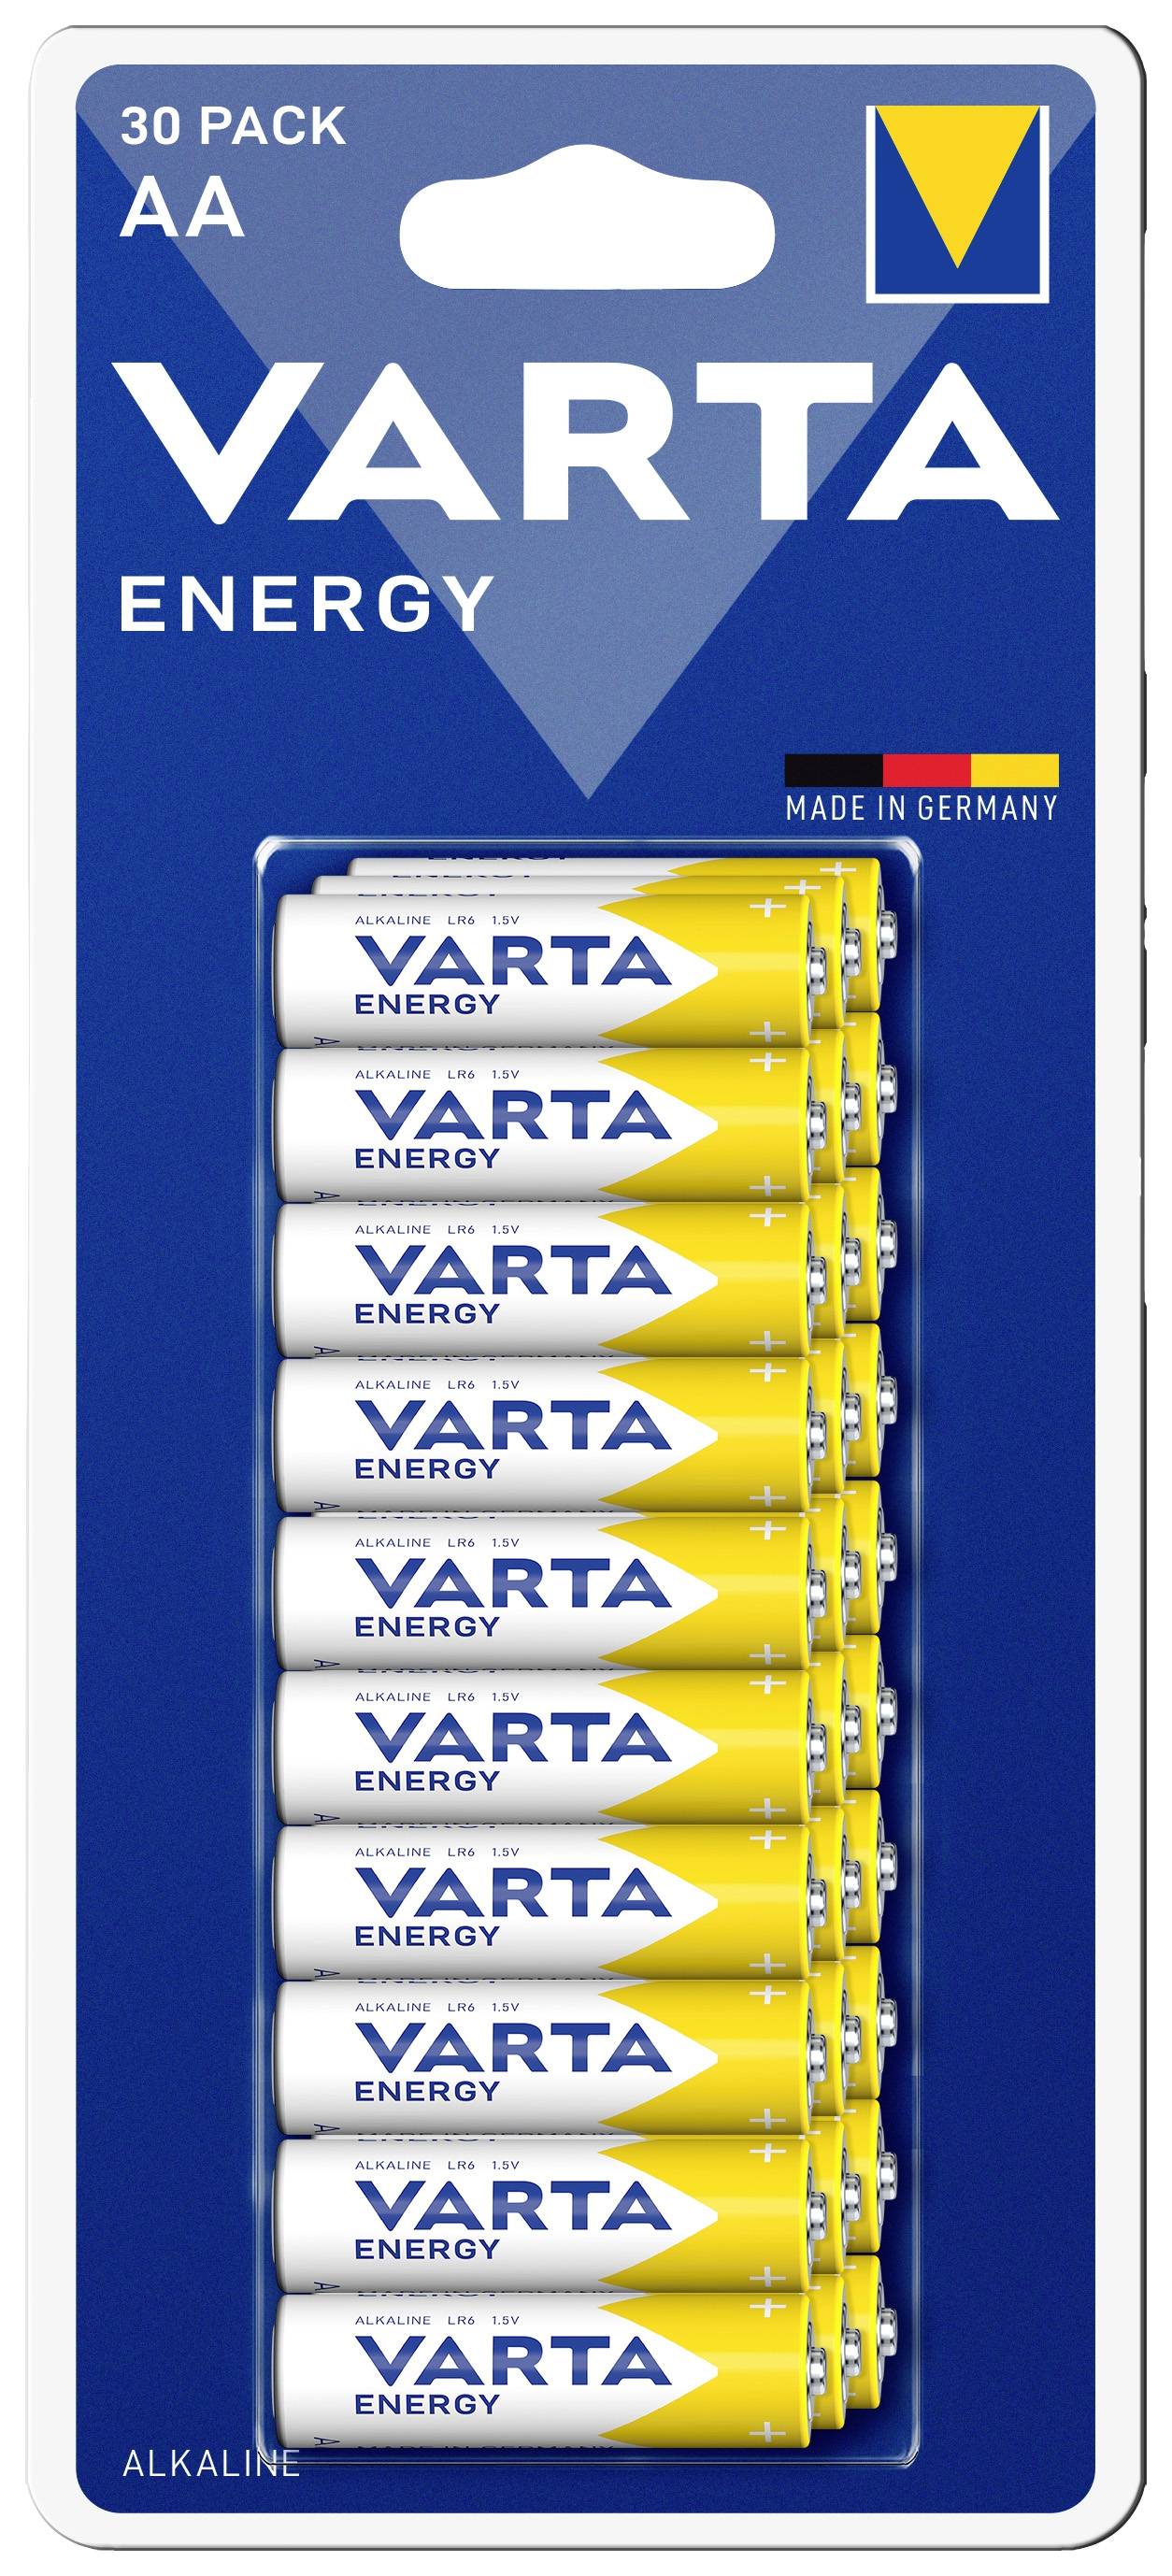 VARTA ENERGY AA Bli 30 Mignon (AA)-Batterie Alkali-Mangan 1.5 V 30 St.